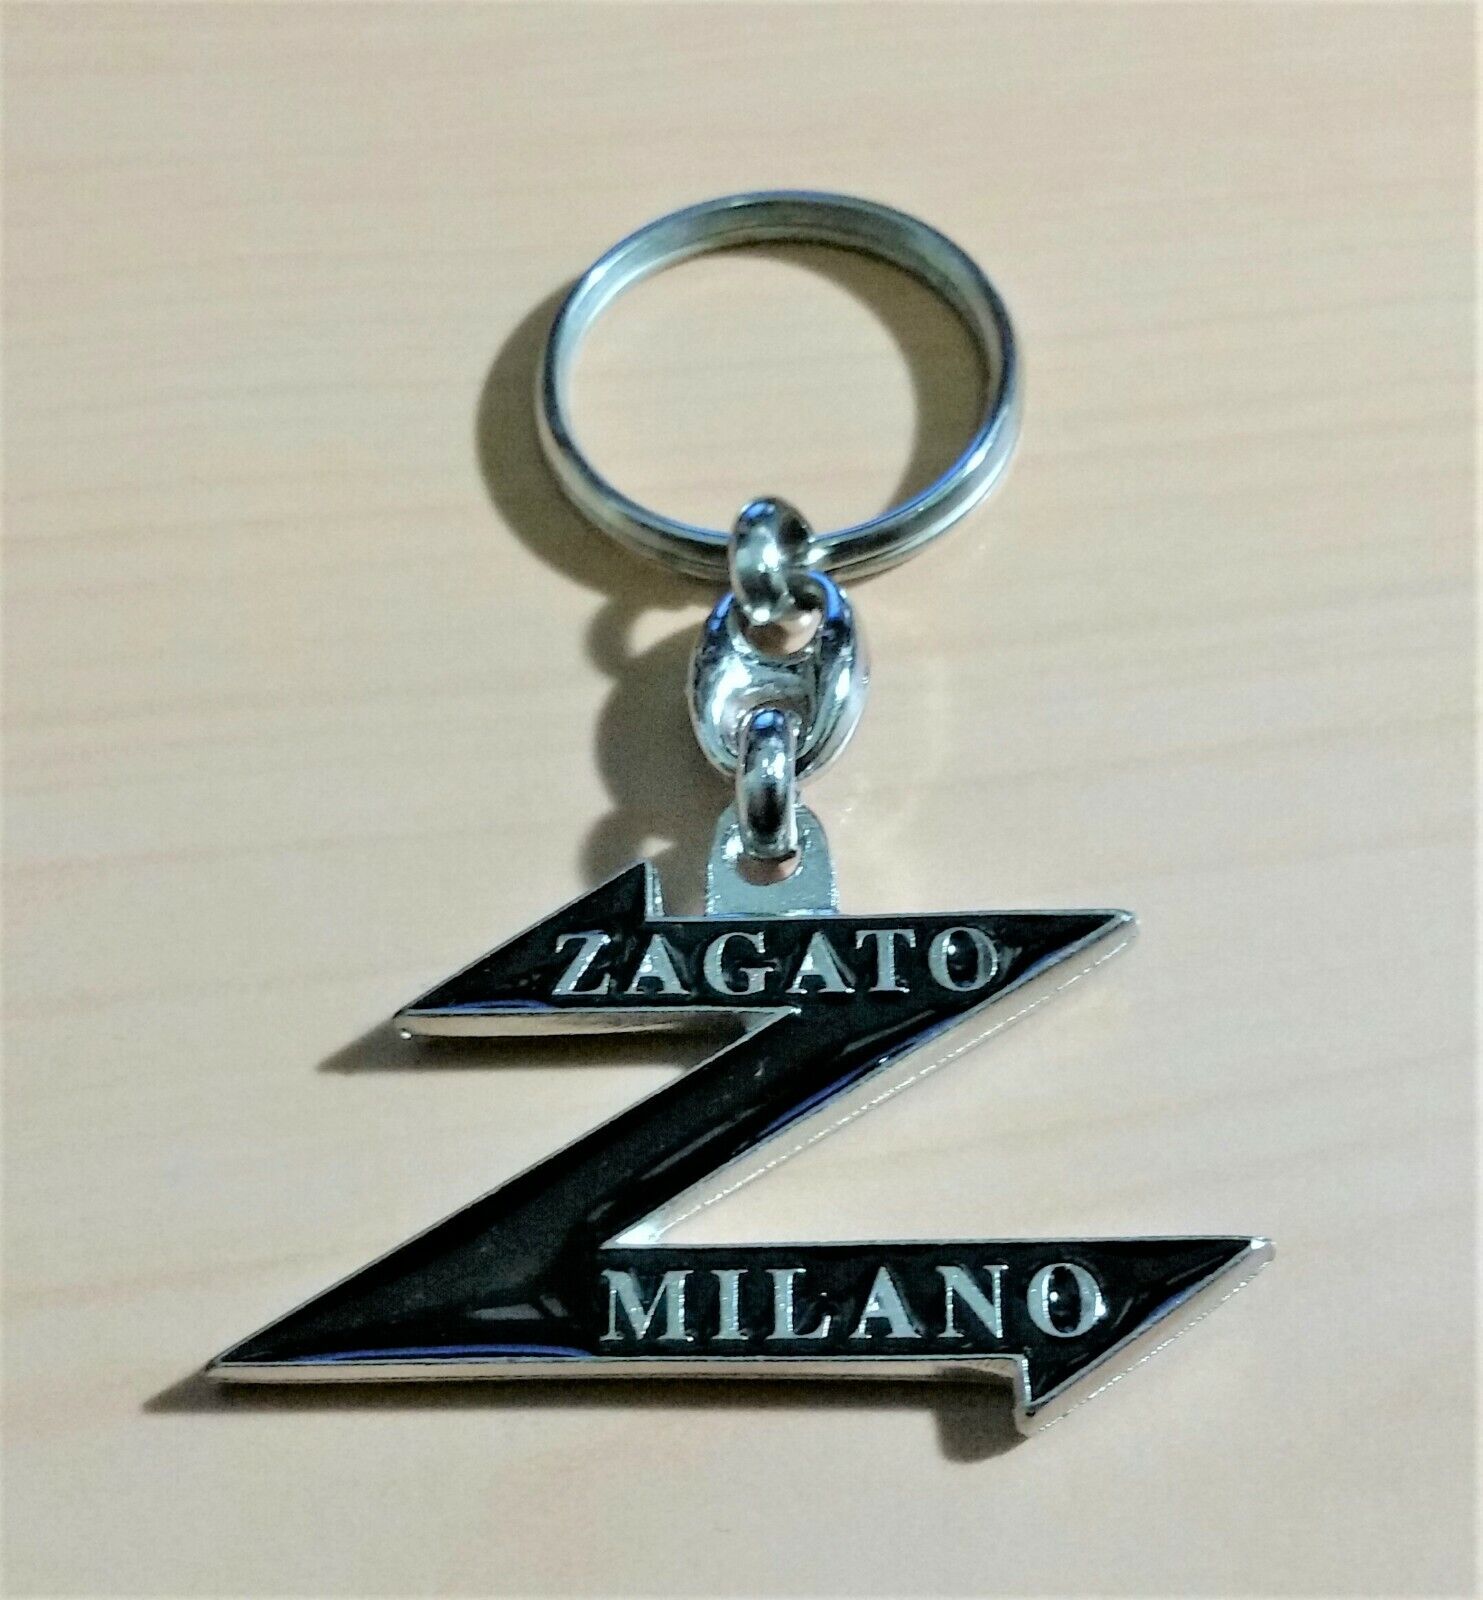 Zagato Keyring Logo - Dimensions 51x32mm